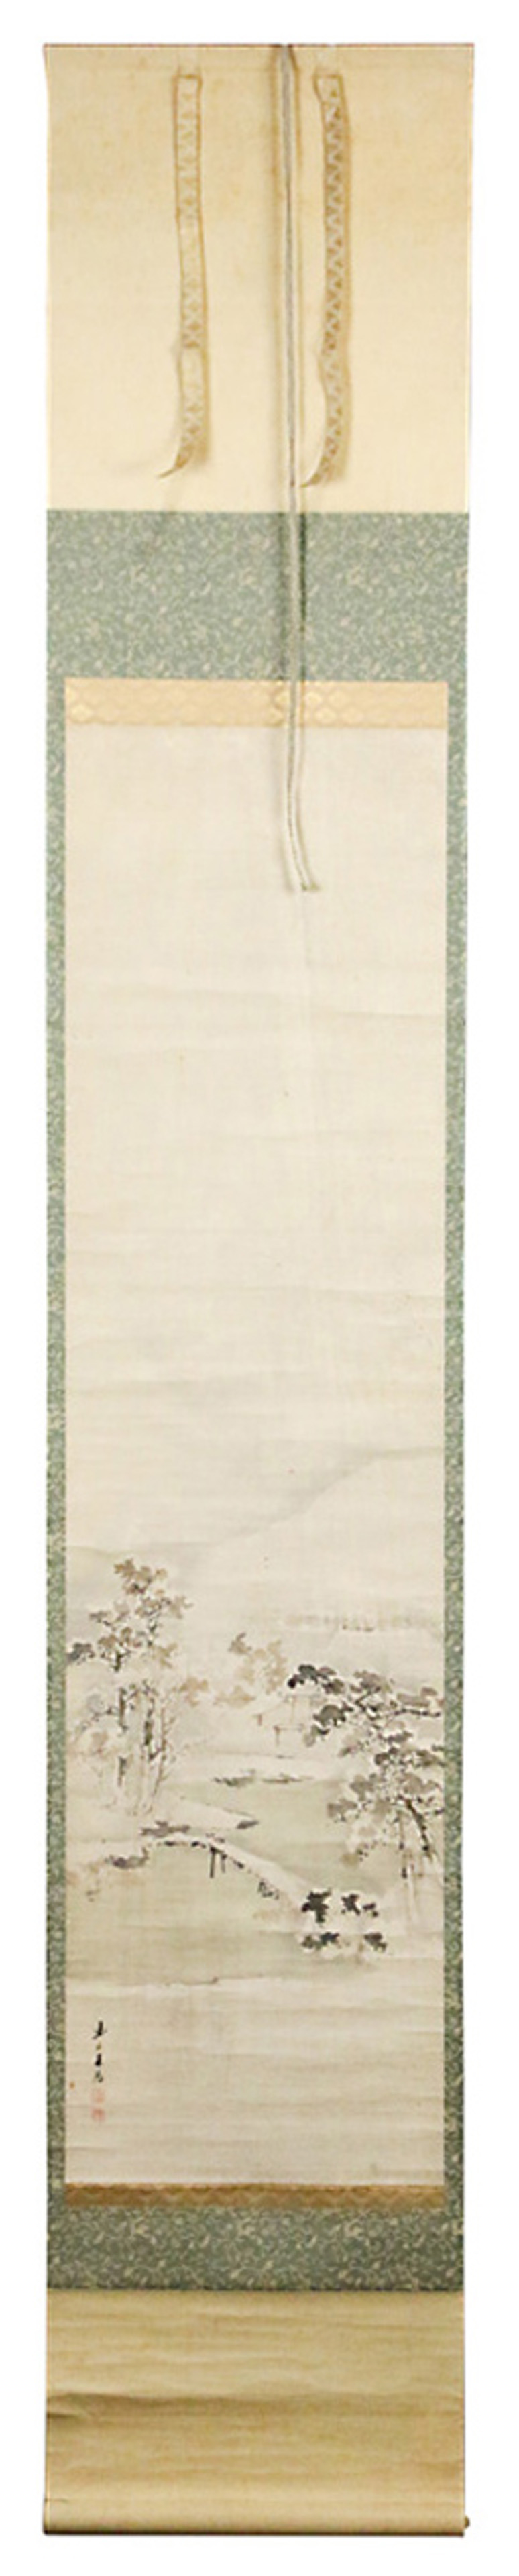 Kishi Renzan Winter landscape, hanging scroll - Image 2 of 3